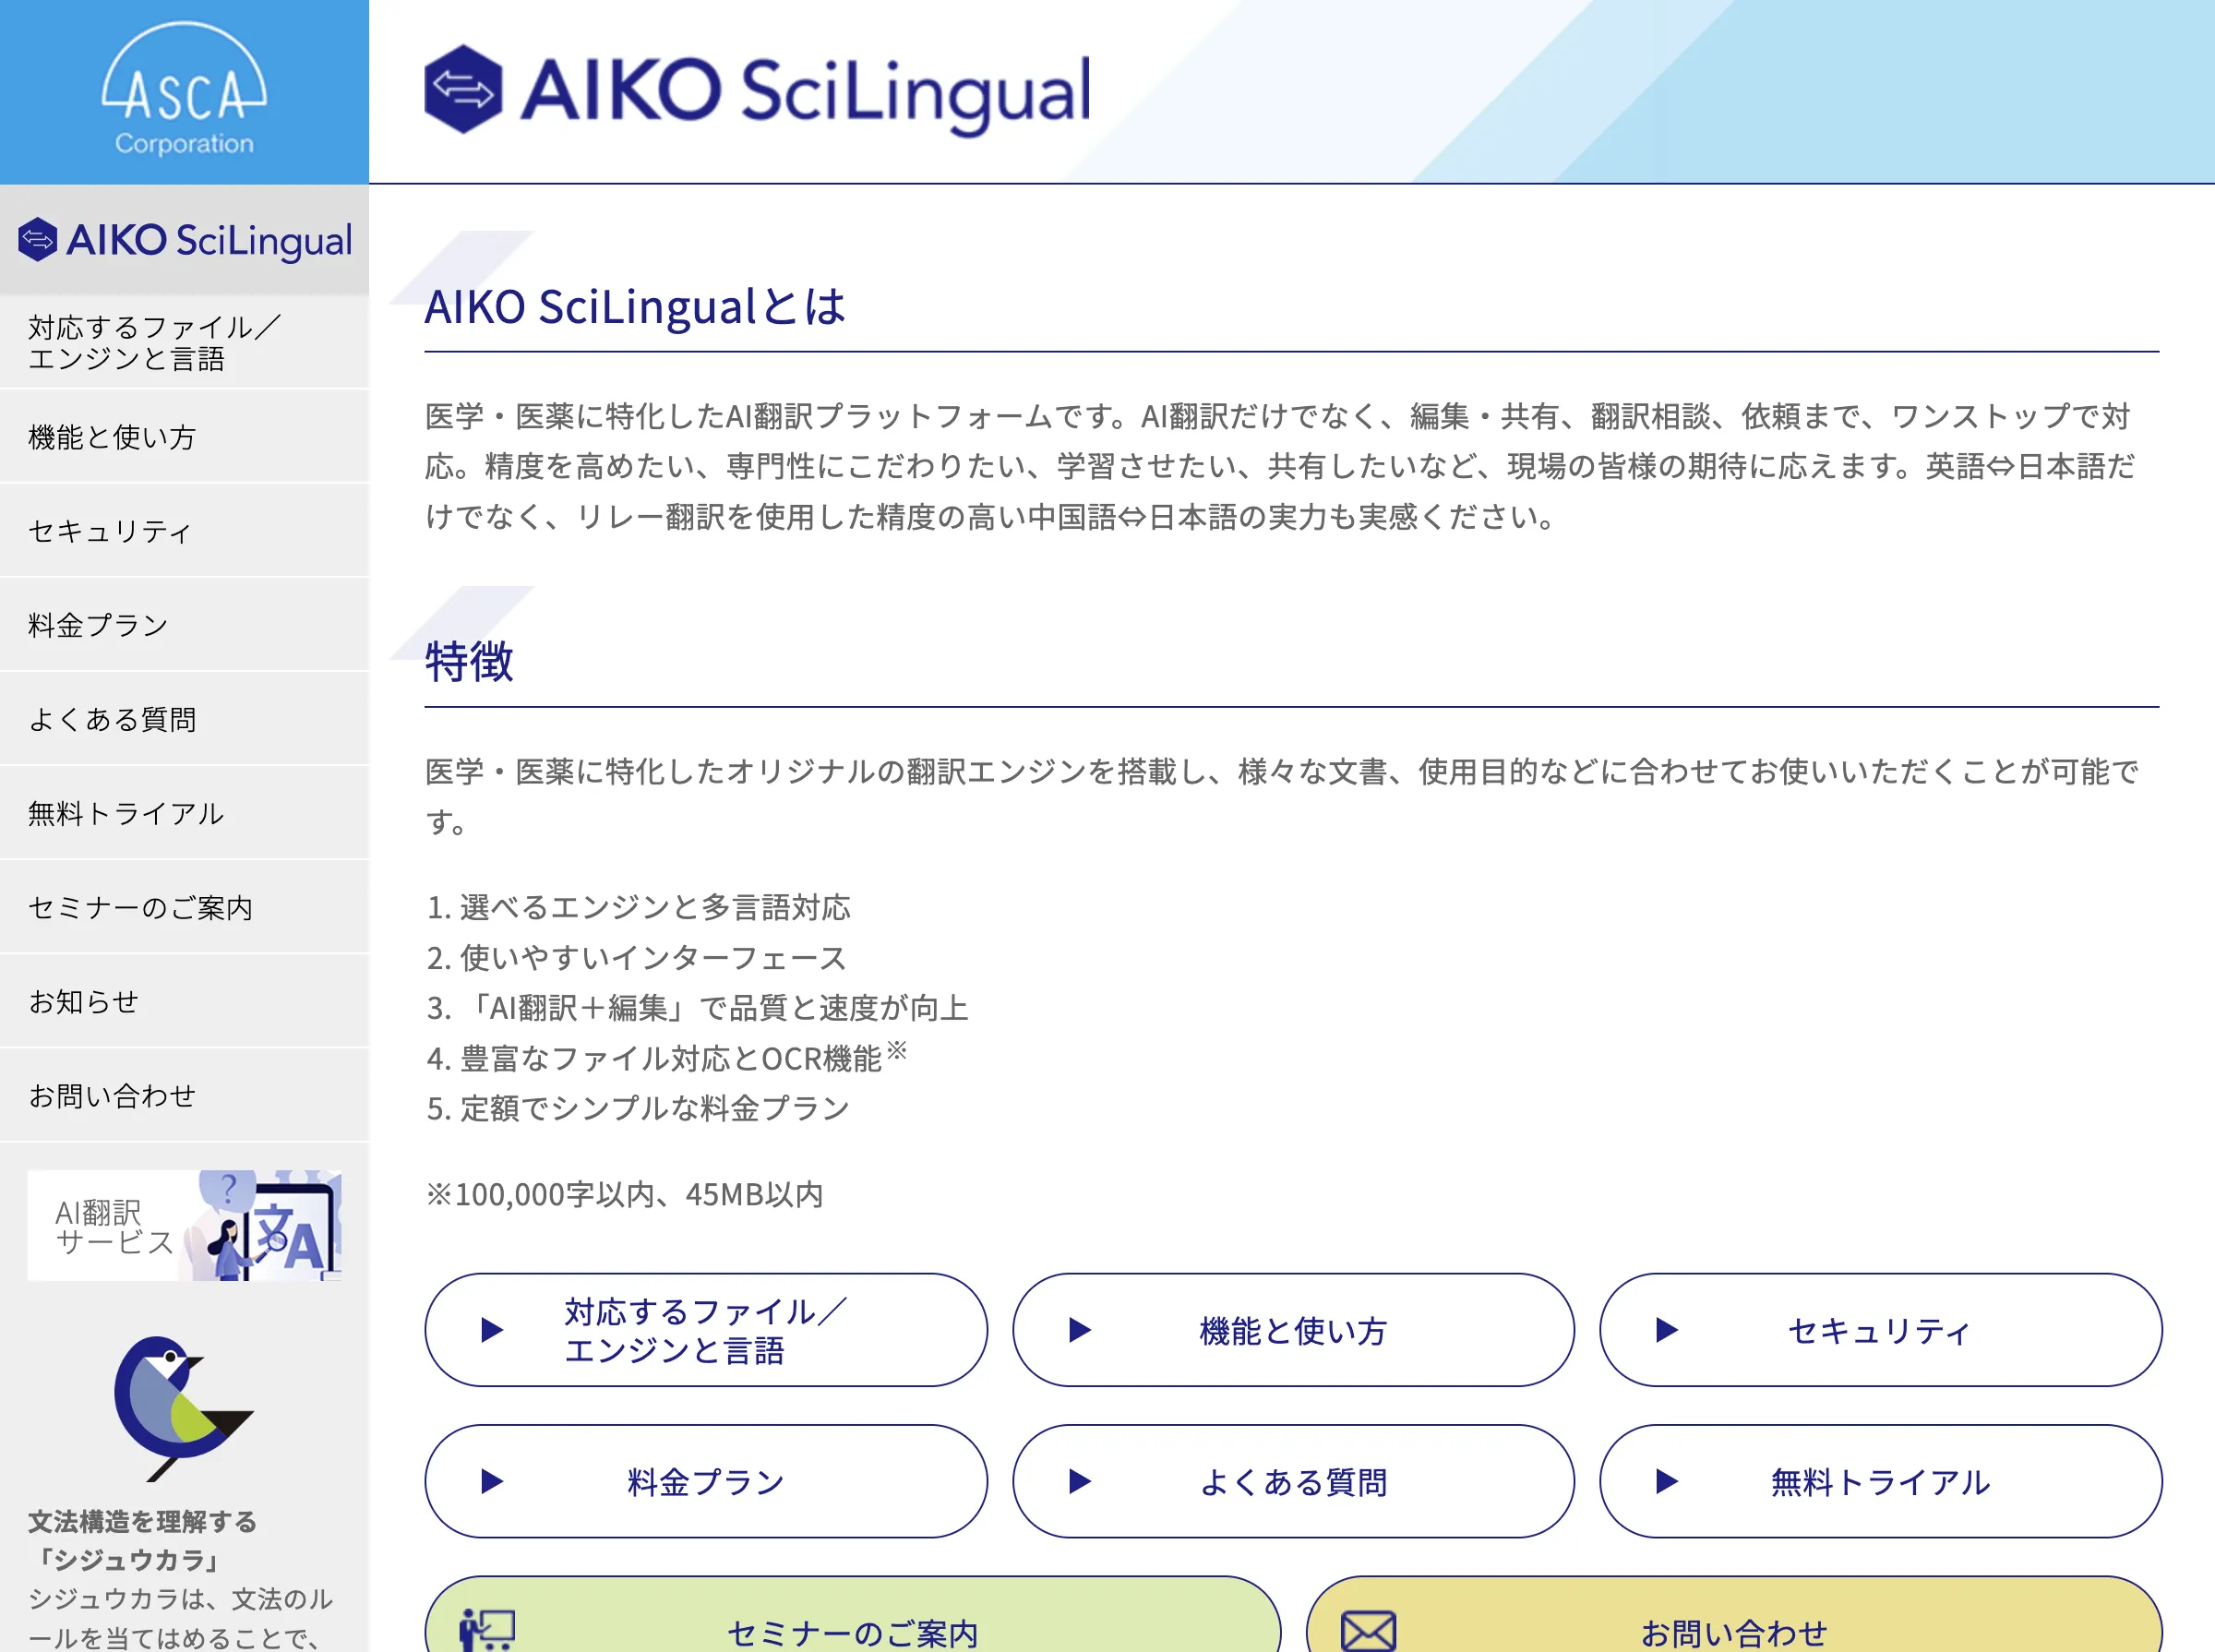 AIKO SciLingual(株式会社アスカコーポレーション)